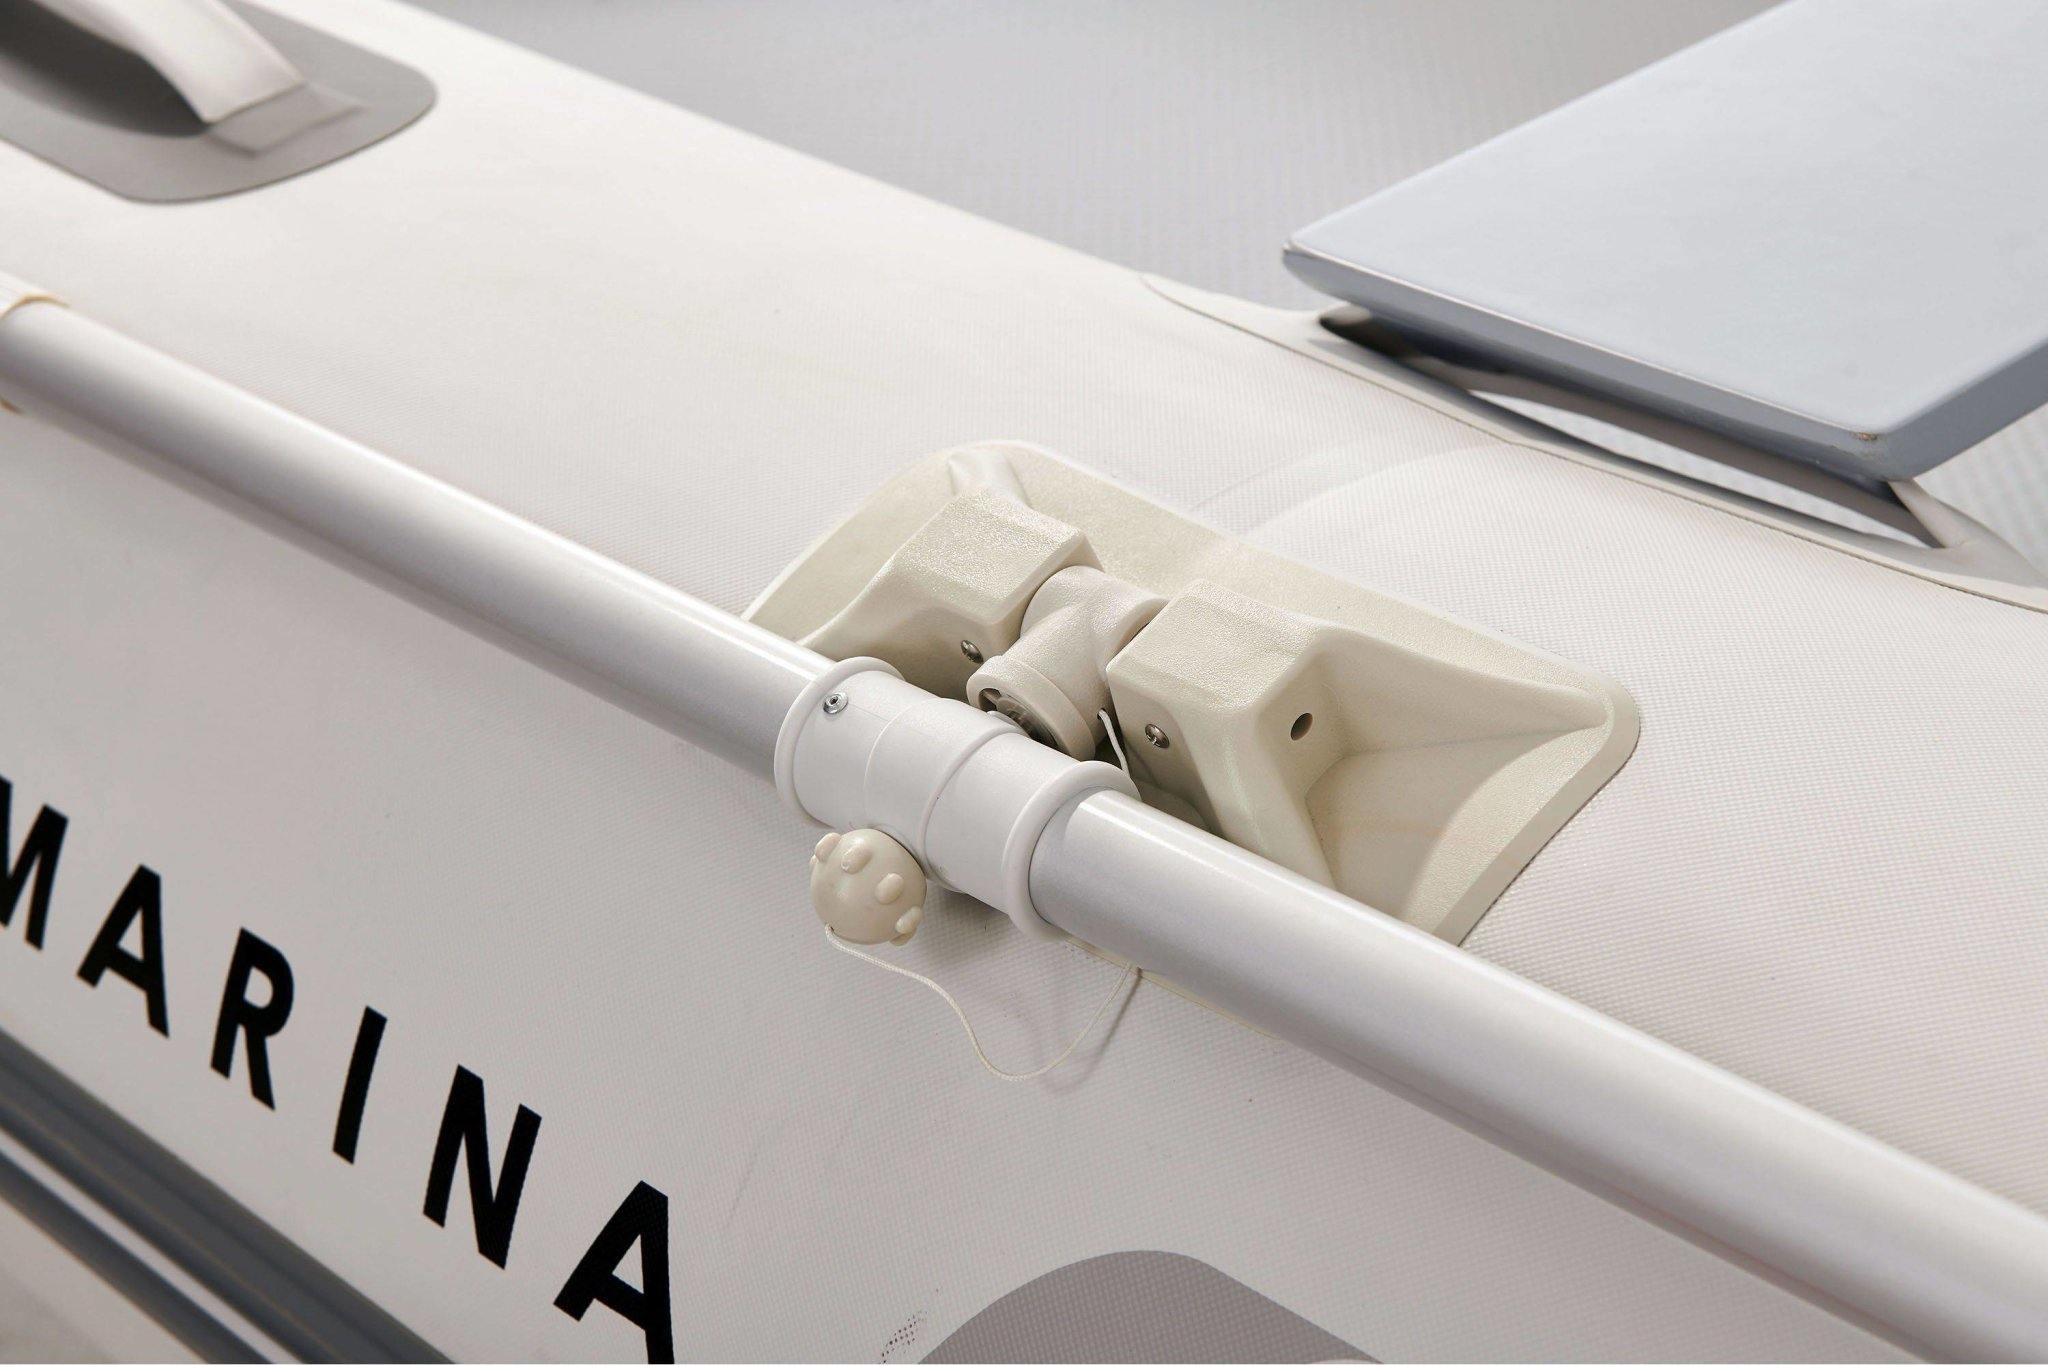 Aircat 11' Inflatable Catamaran with DWF Air Deck - DTI Direct USA